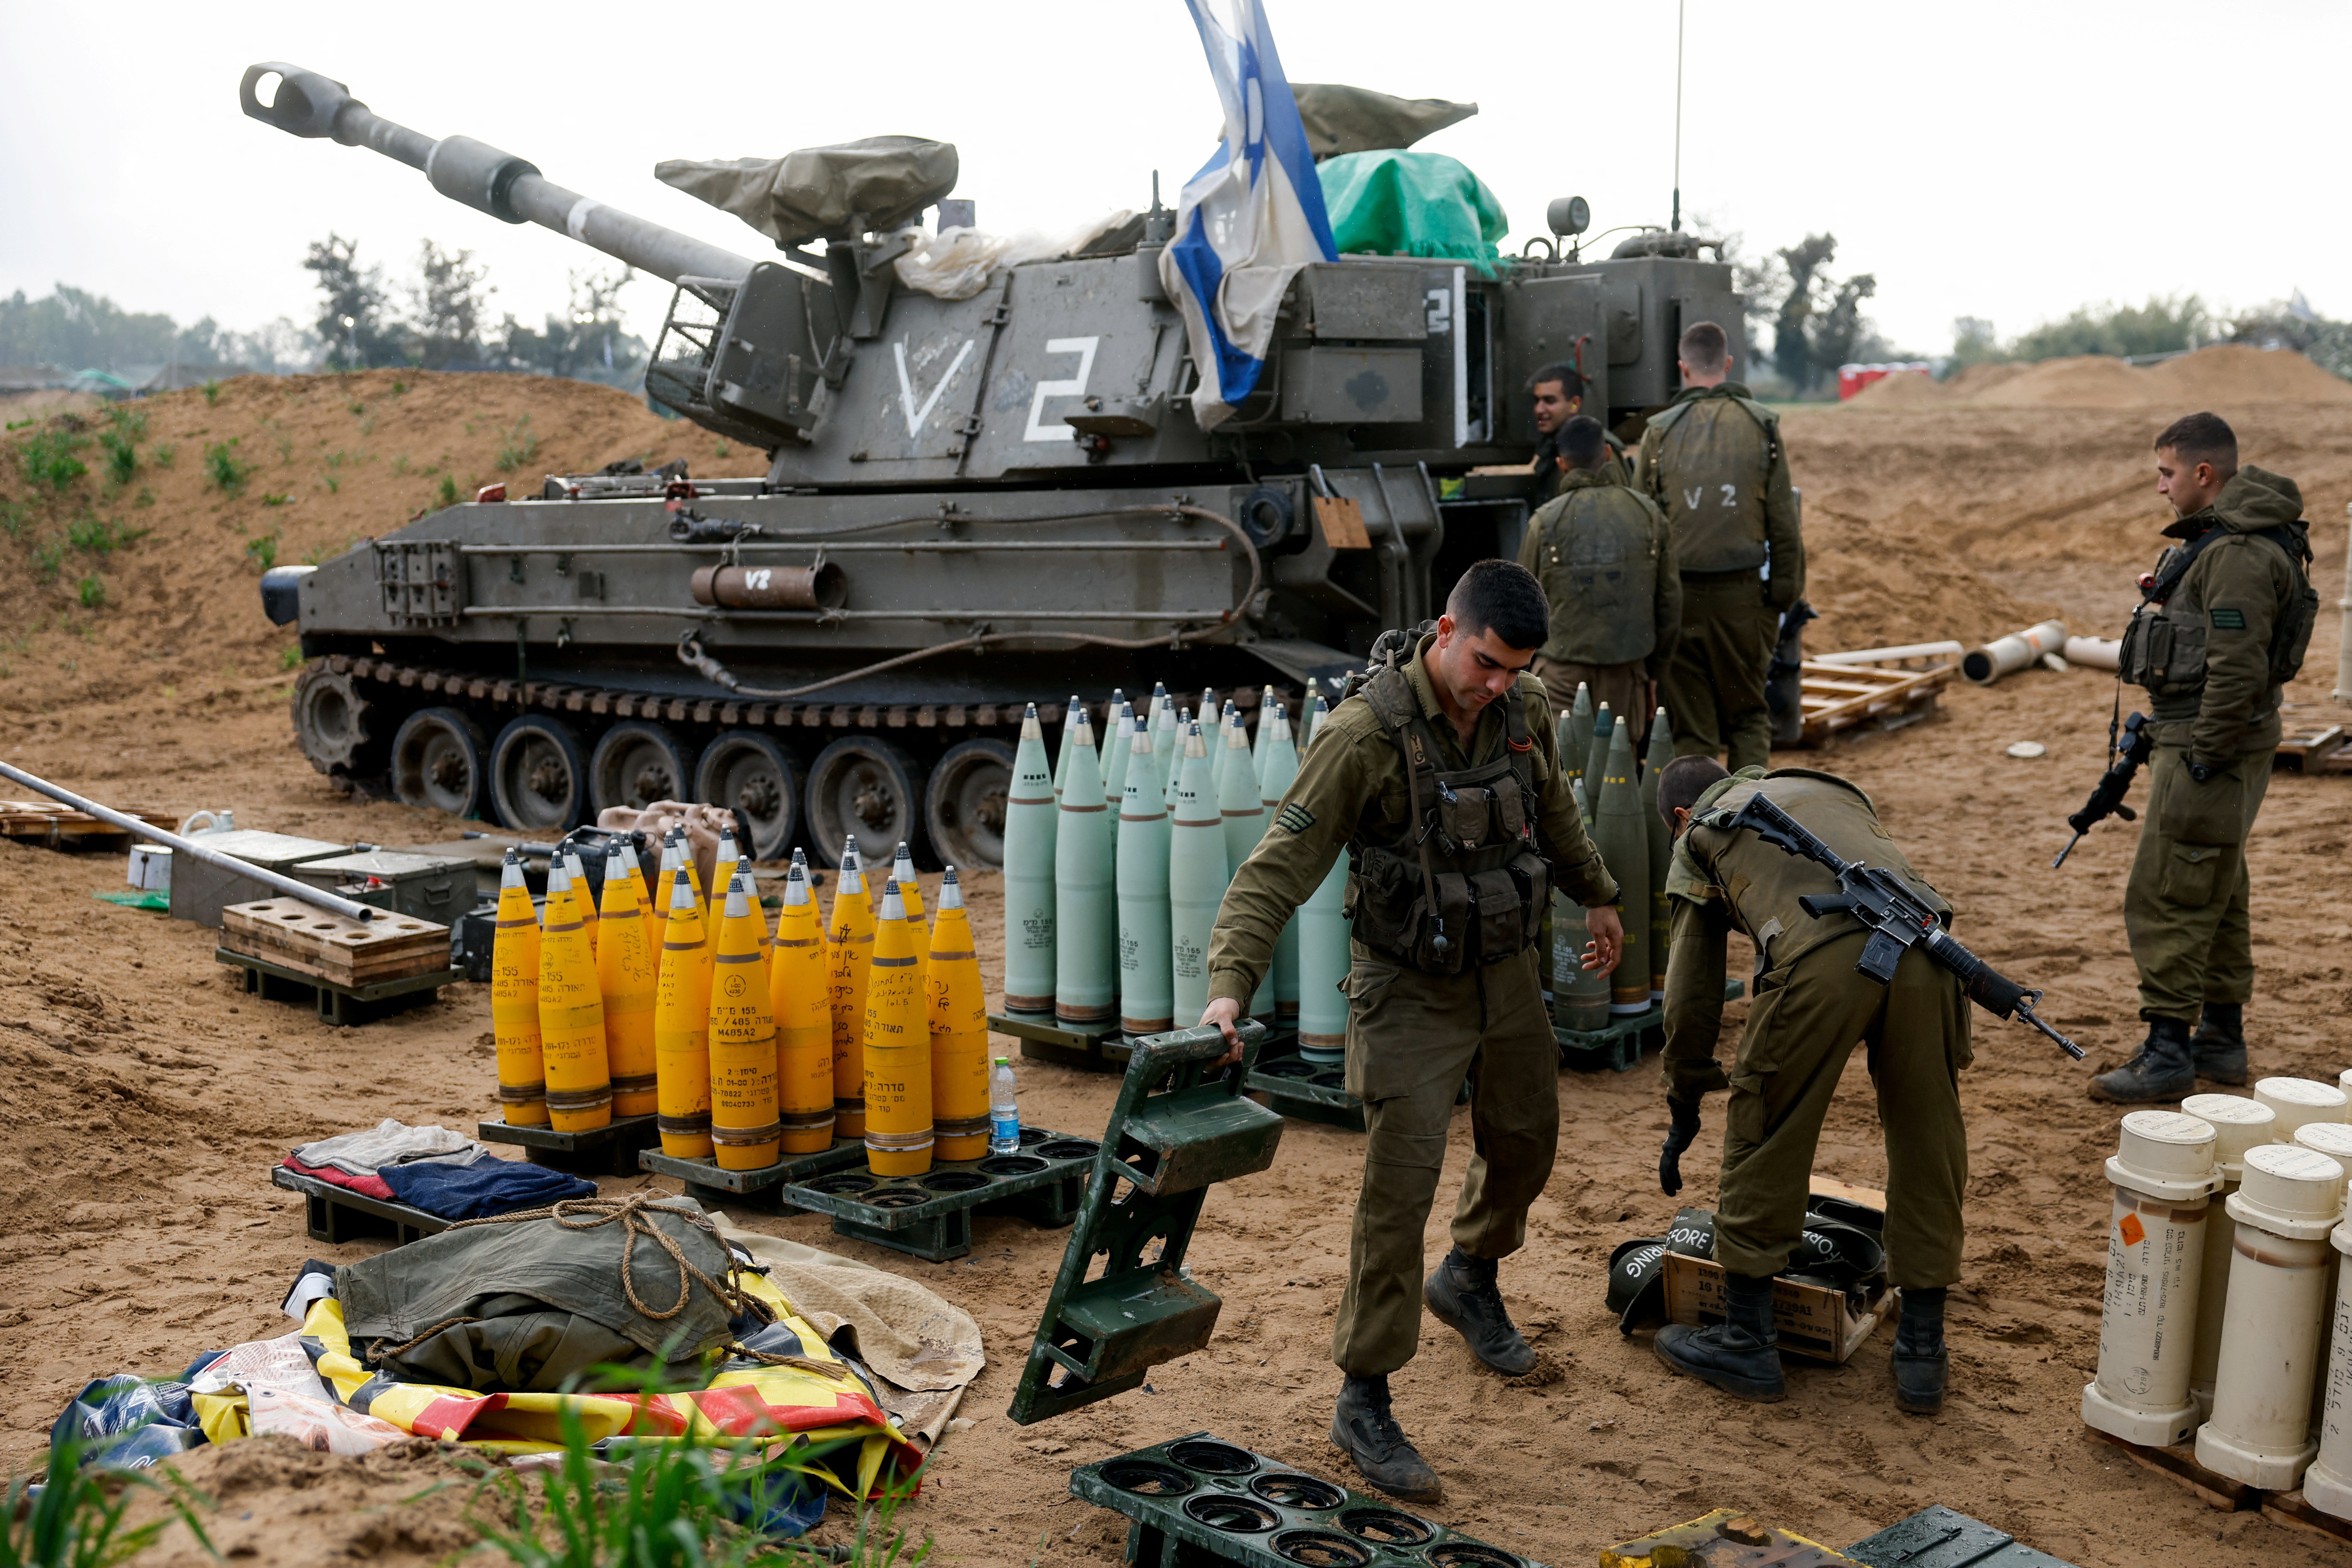 Israeli soldiers prepare shells near a mobile artillery unit in Israel